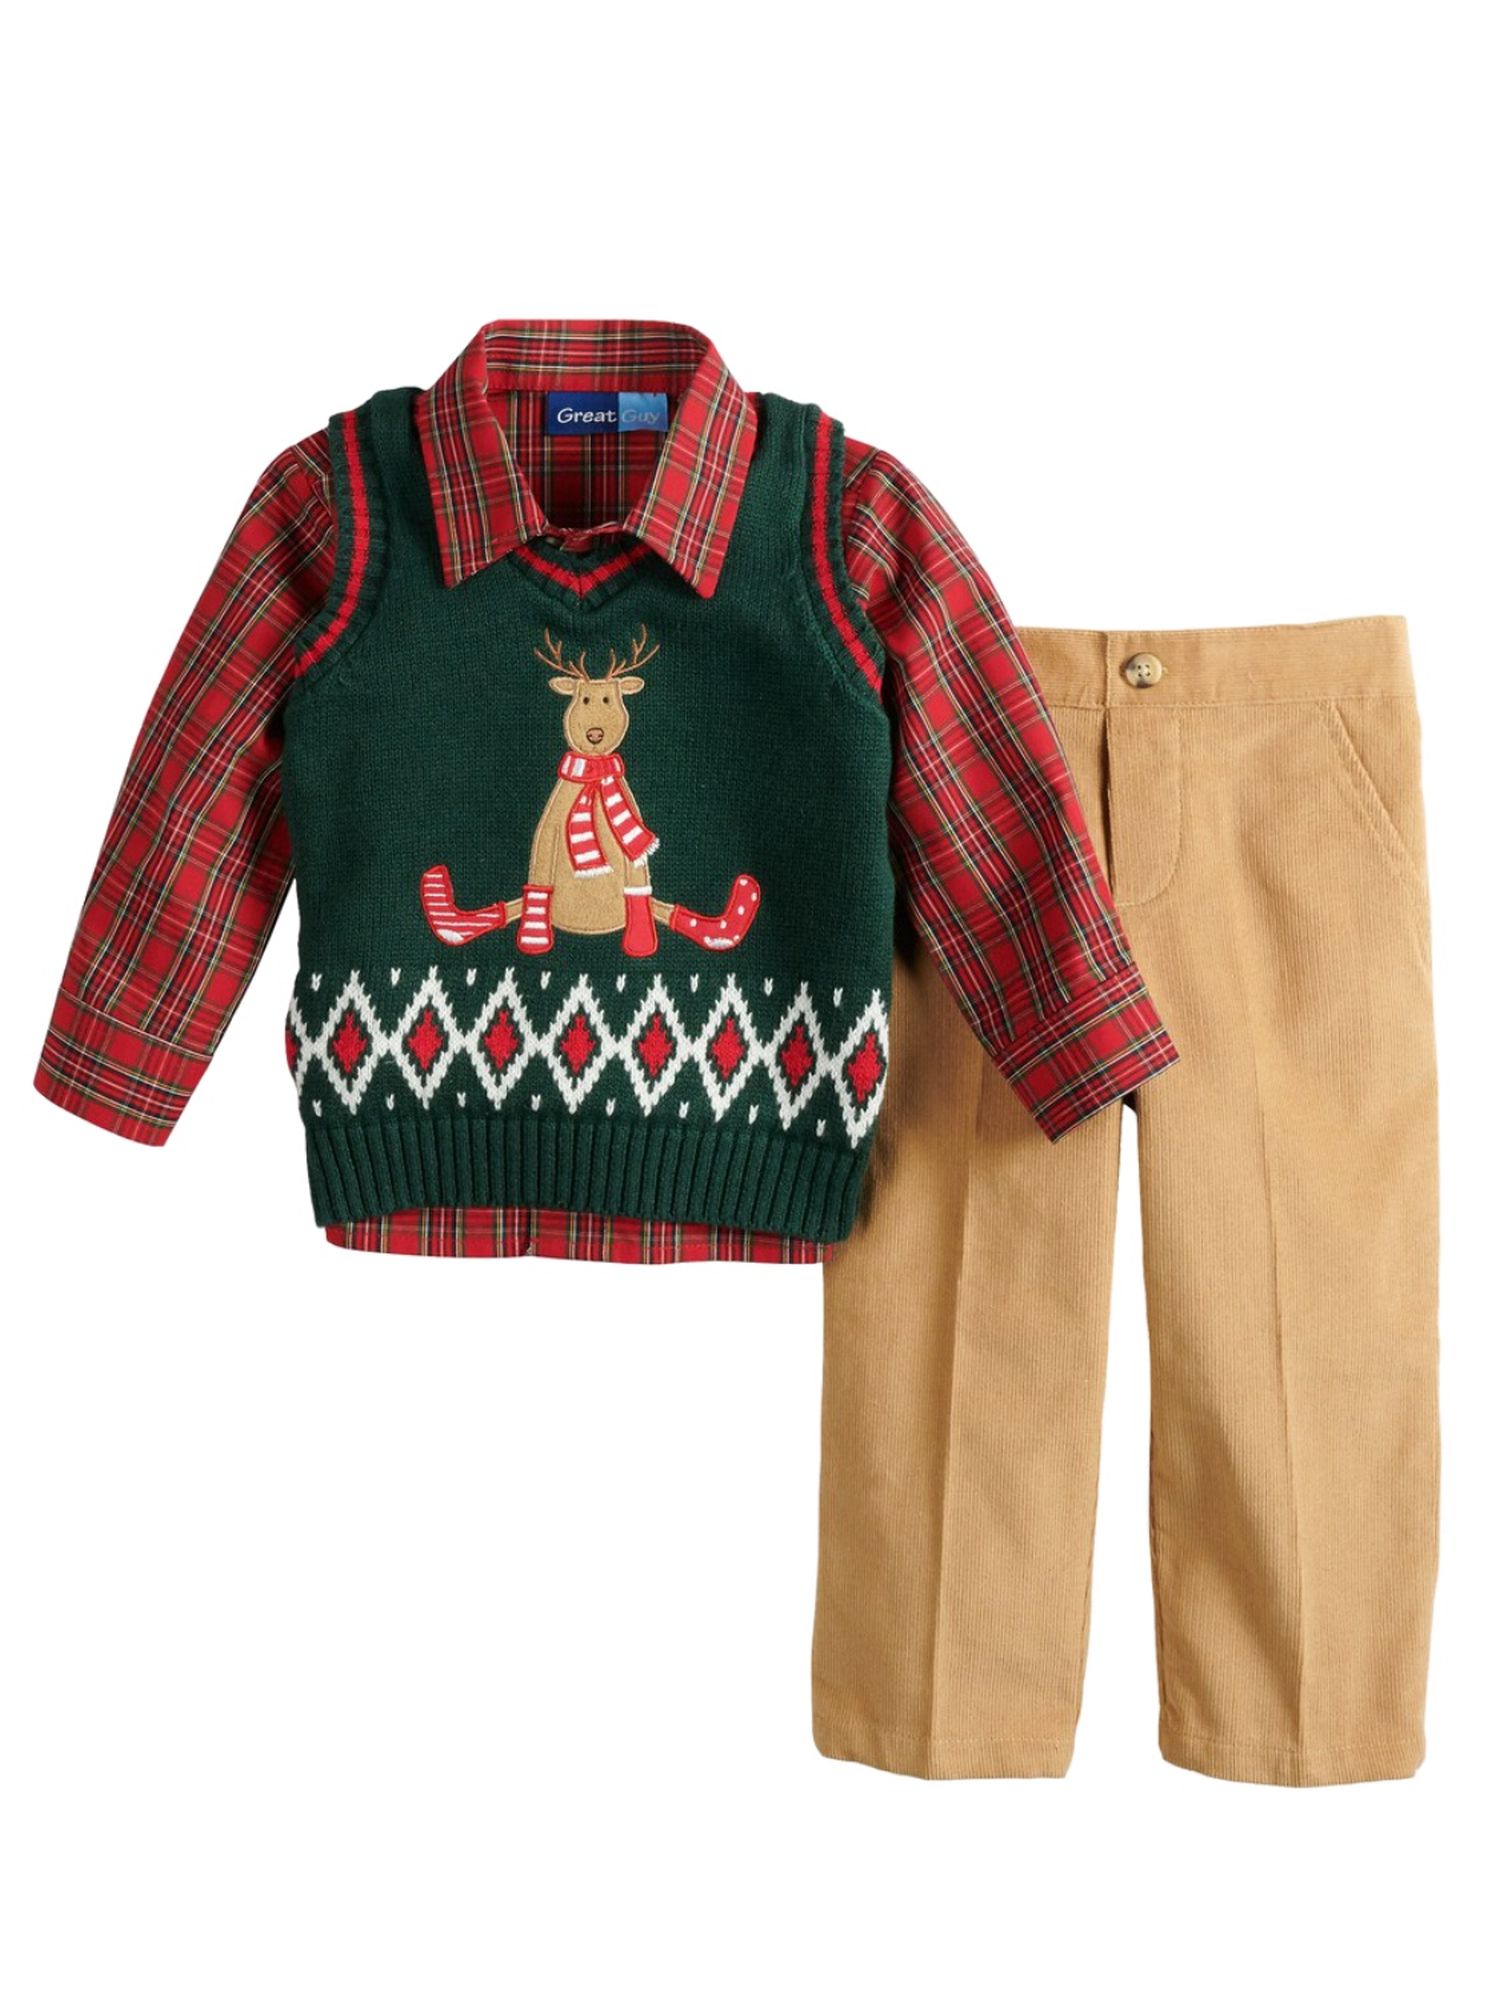 Great Guy Toddler Boys Holiday Reindeer Sweater Vest Plaid Shirt & Corduroy Pant Set